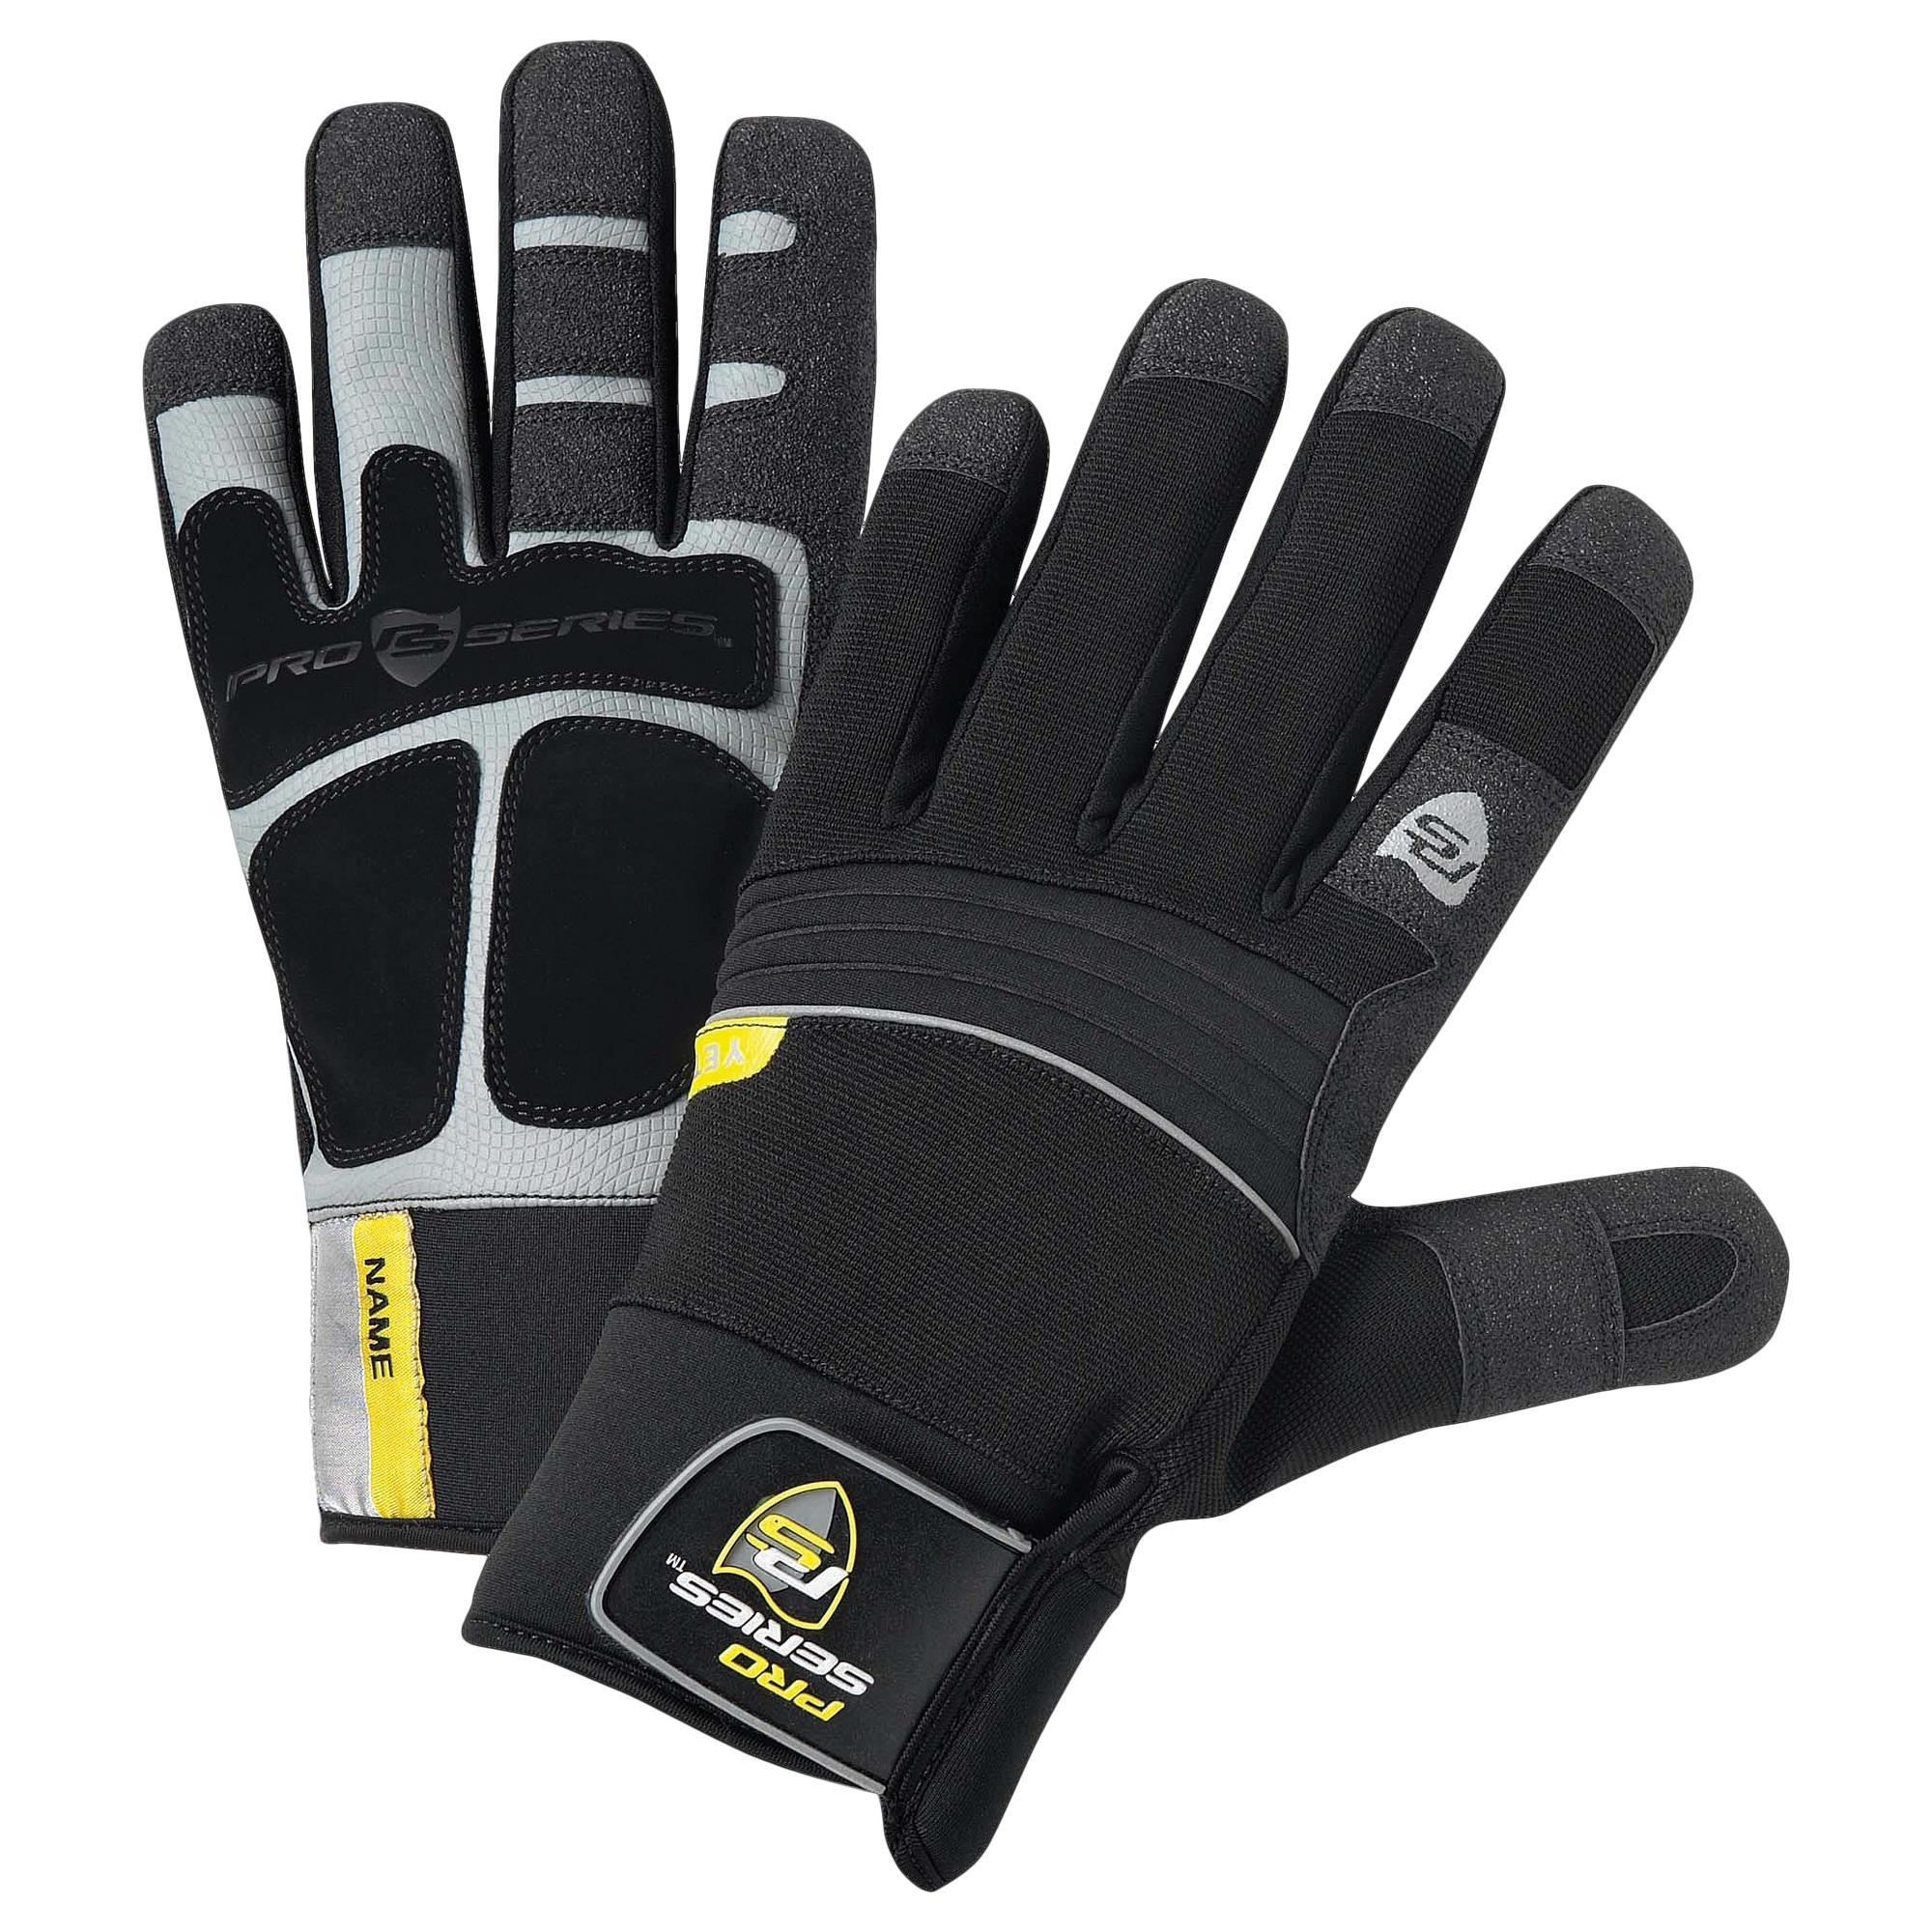 Portwest Arctic Winter Grip Glove - Nitrile Sandy - A146